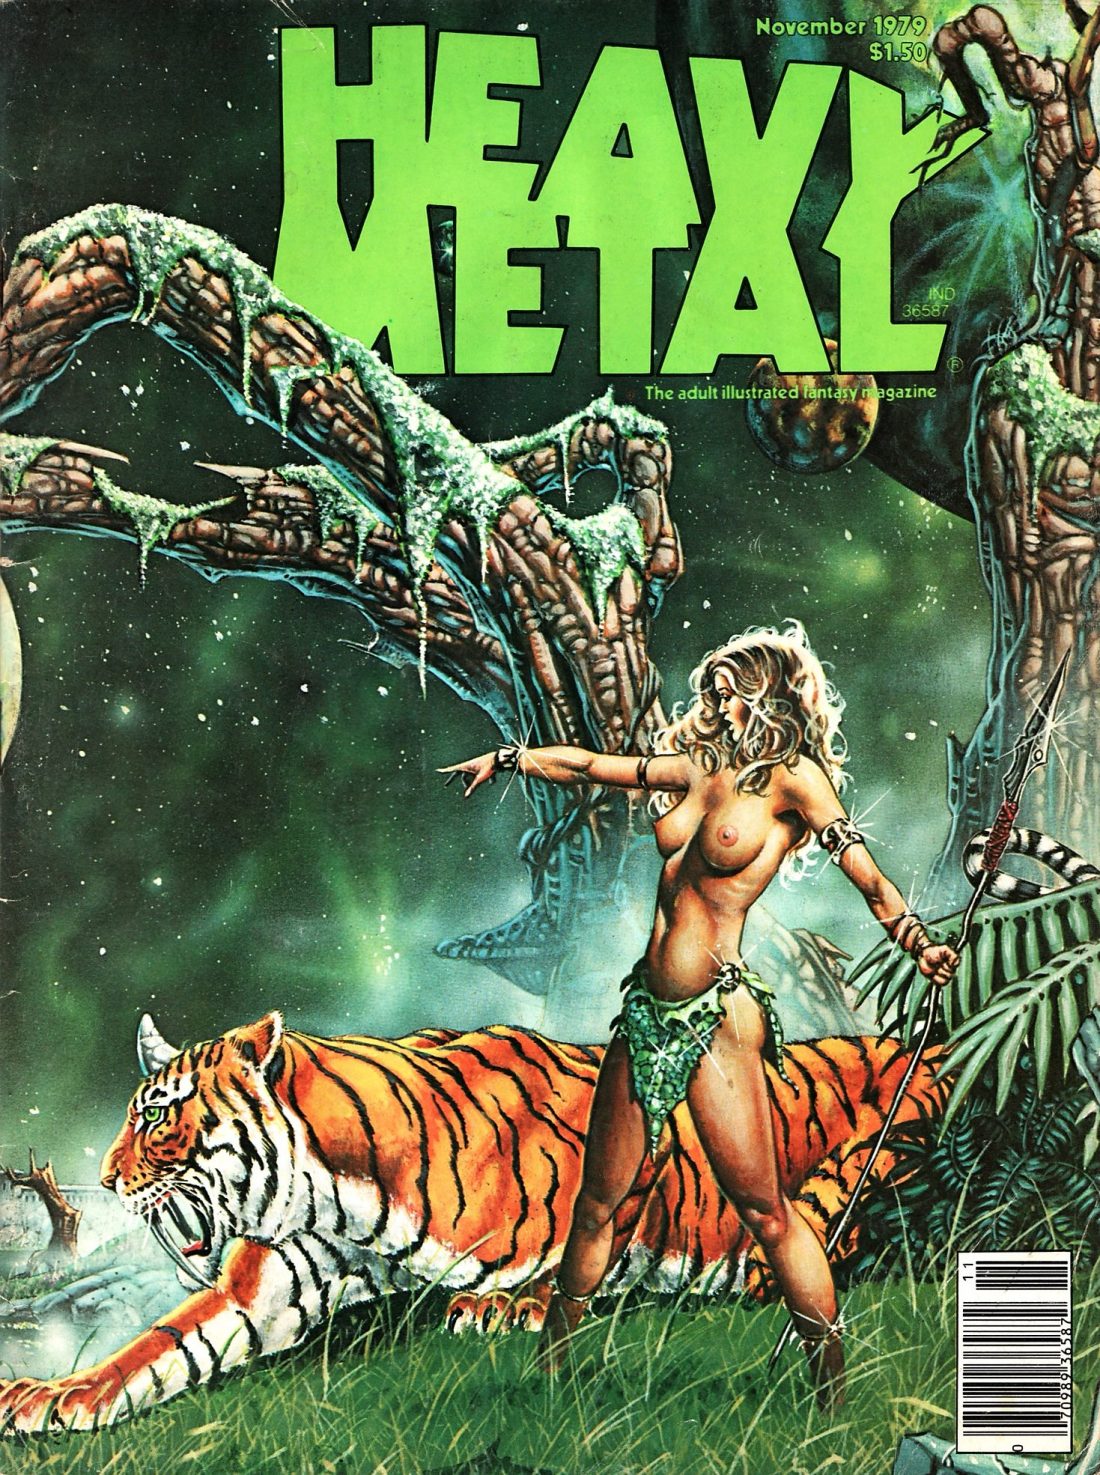 hm-1979-11-000-cover